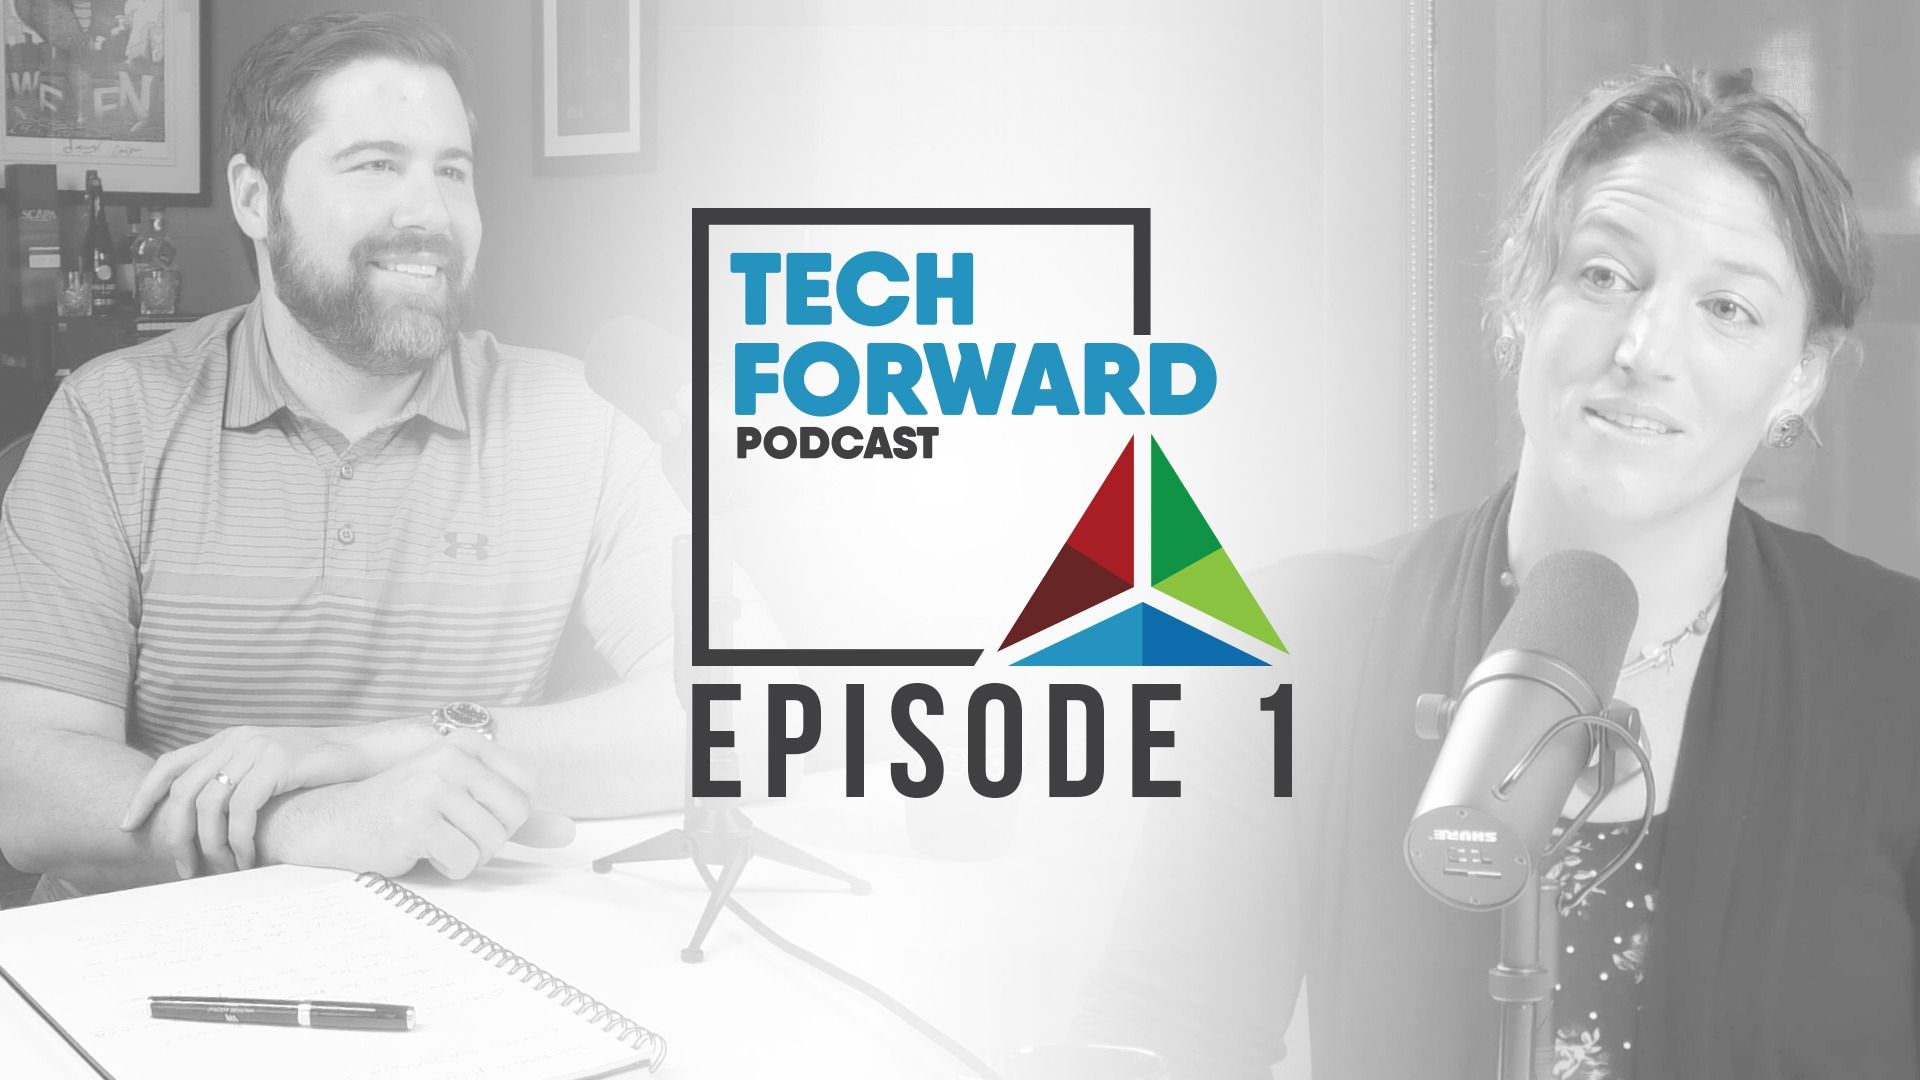 Tech forward podcast episode 1.